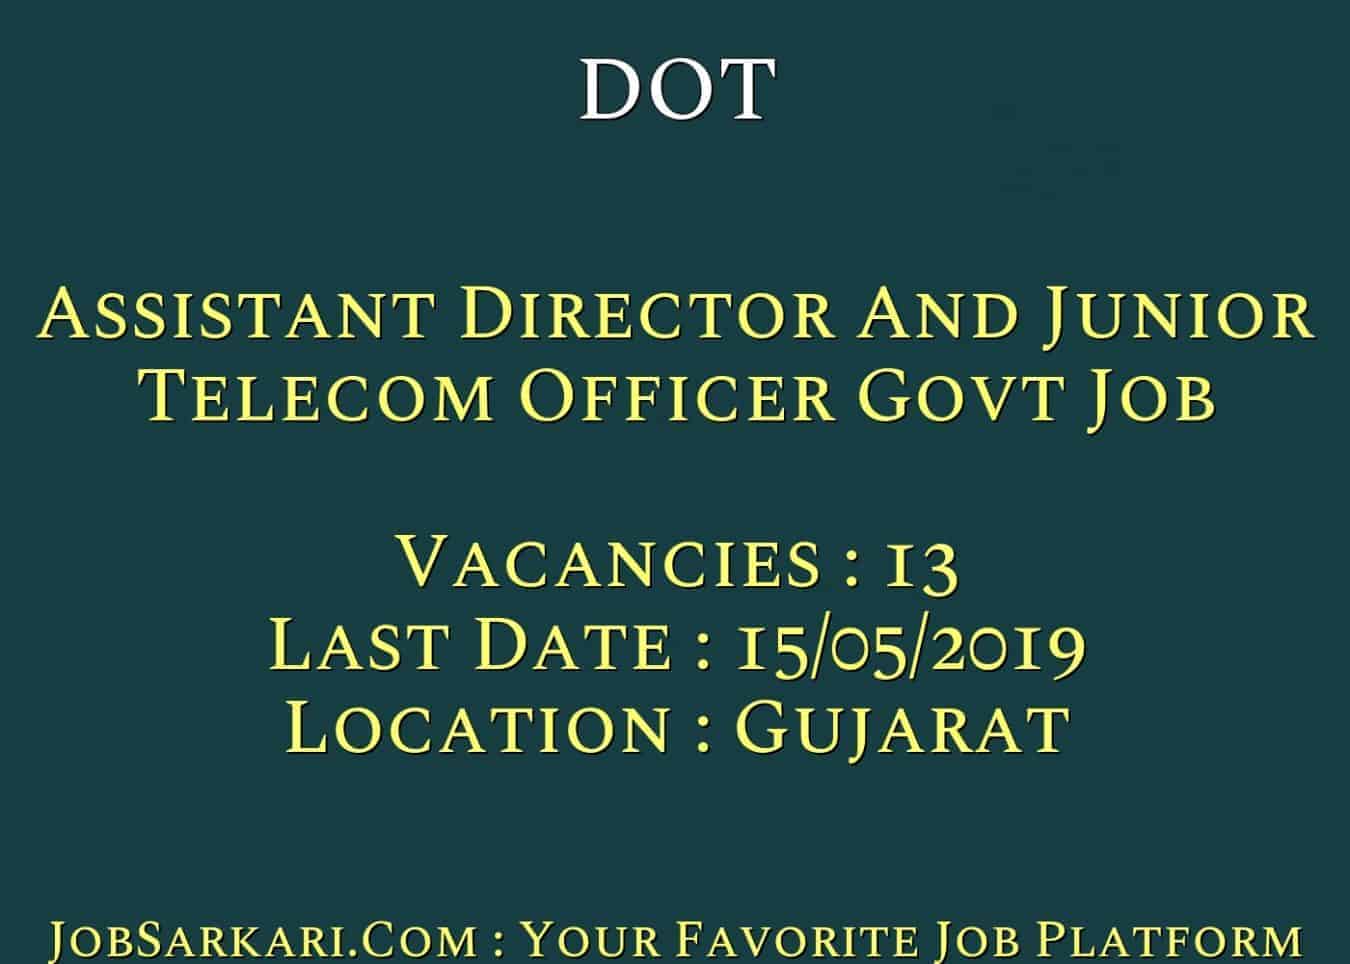 DOT Recruitment 2019 For Assistant Director And Junior Telecom Officer Govt Job